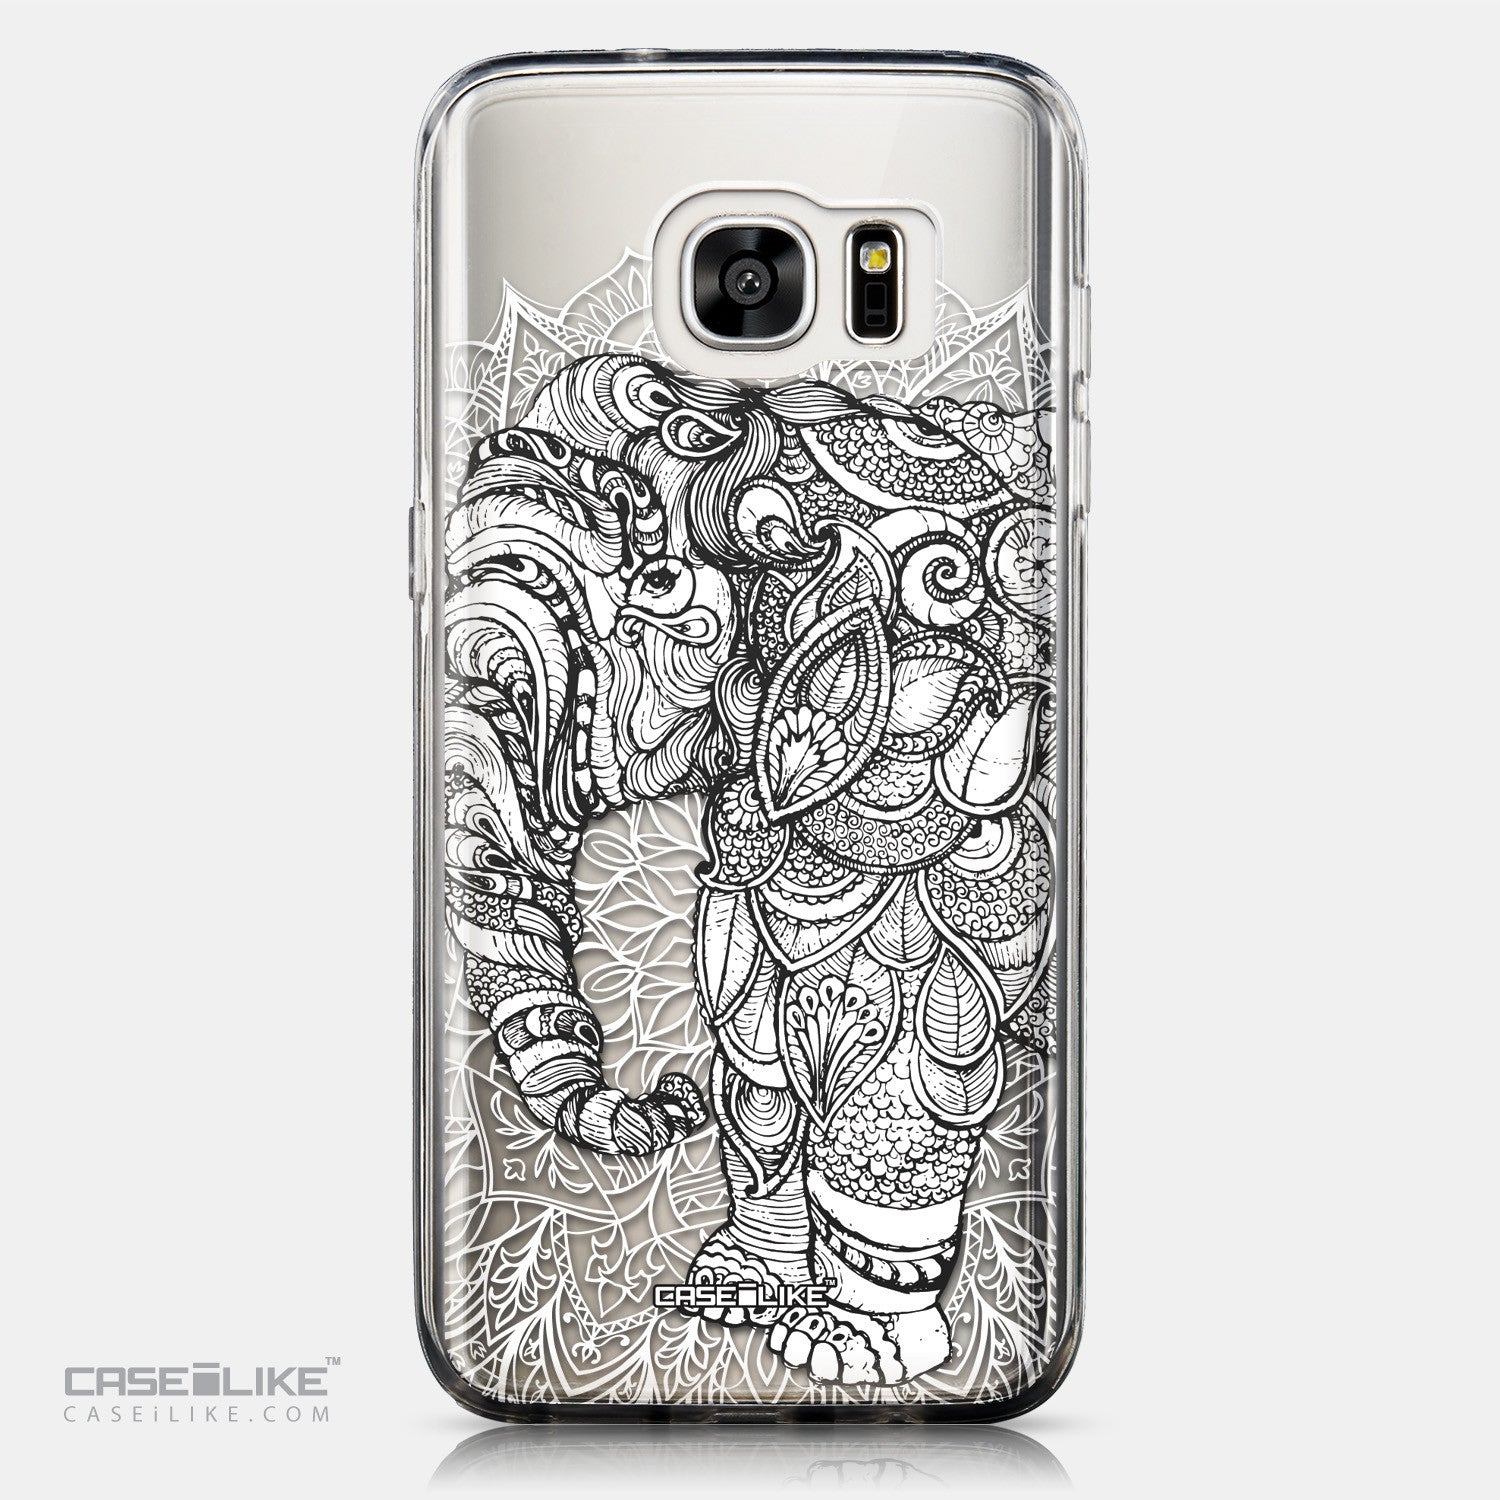 Samsung Galaxy S7 Edge Back Cover Mandala Art 2300 Caseilike